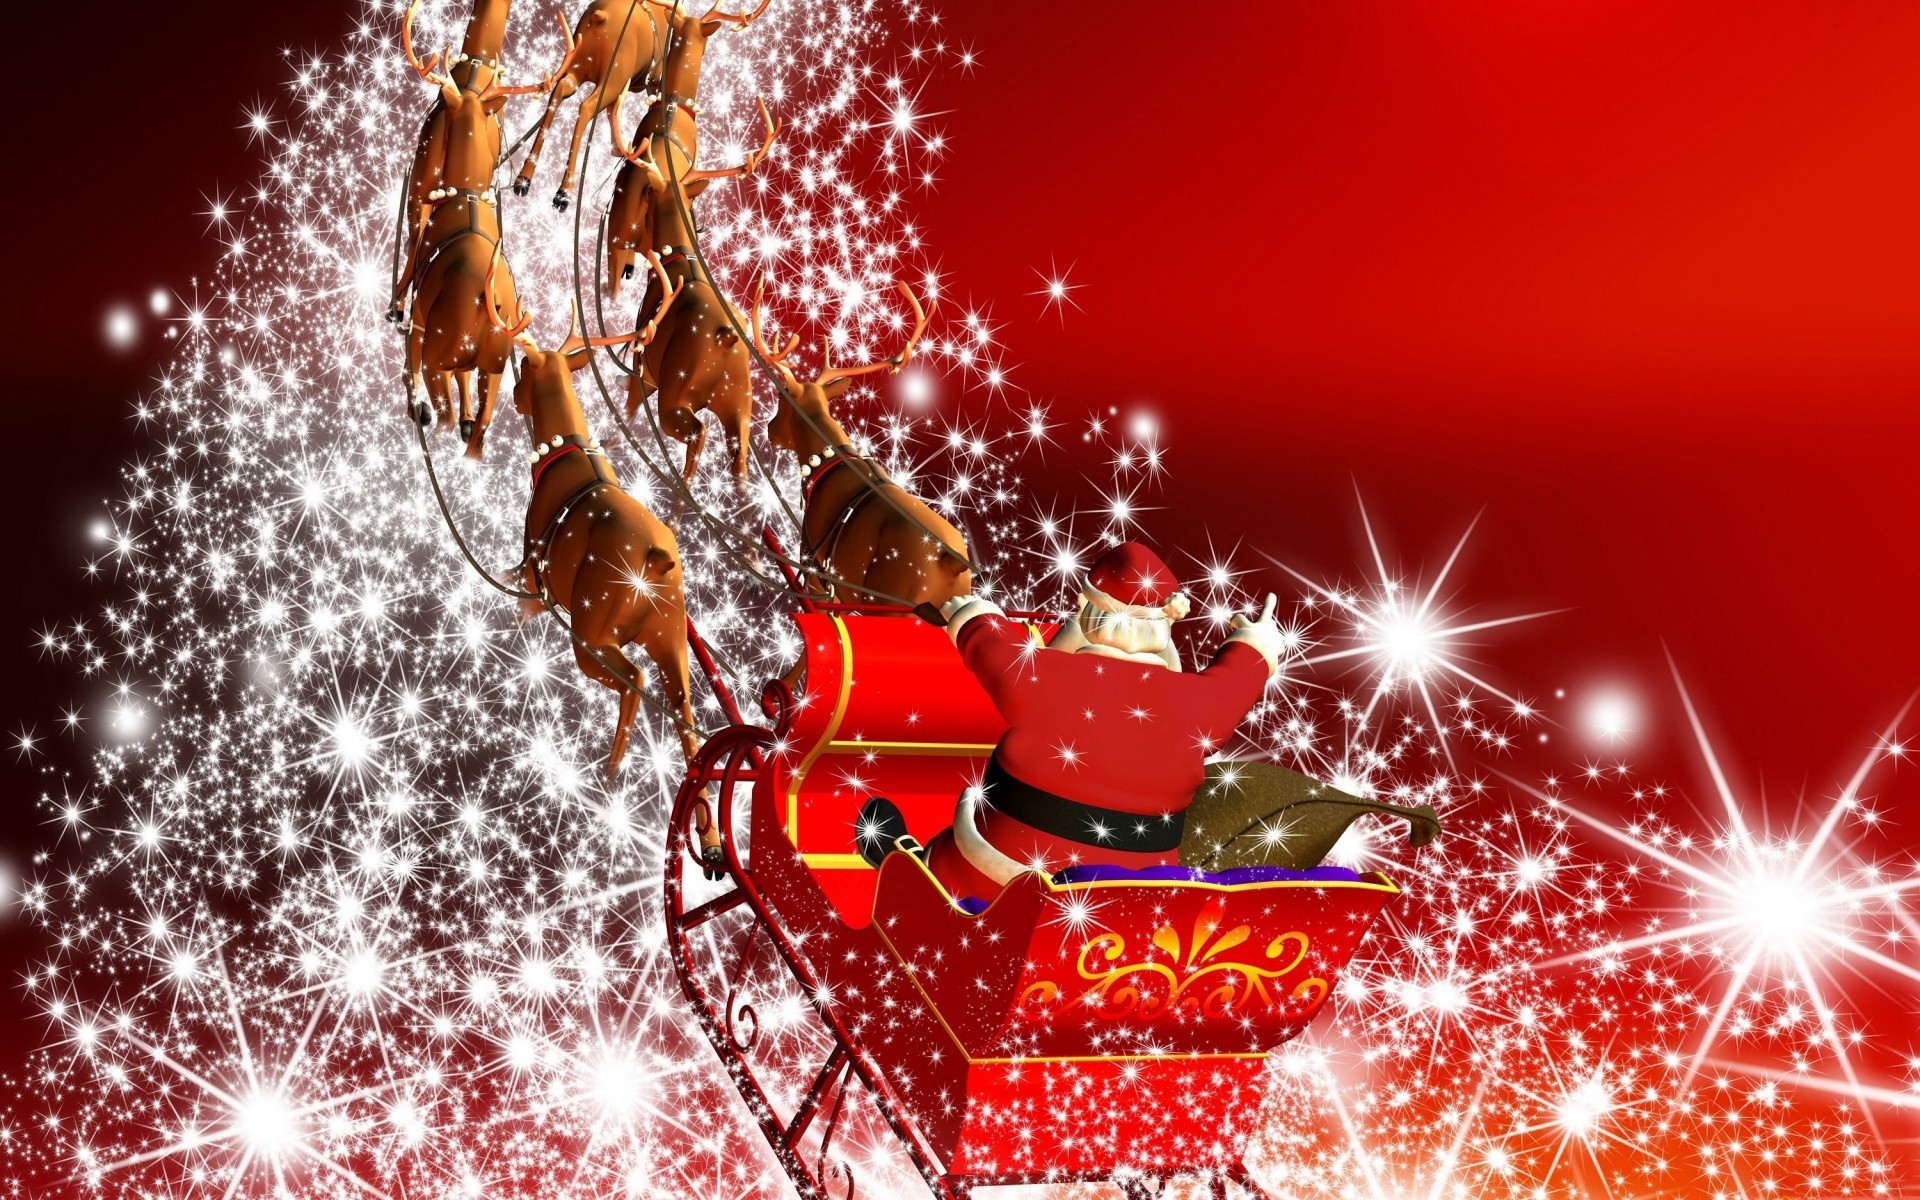 Happy christmas wallpapers santa claus in harness racing away